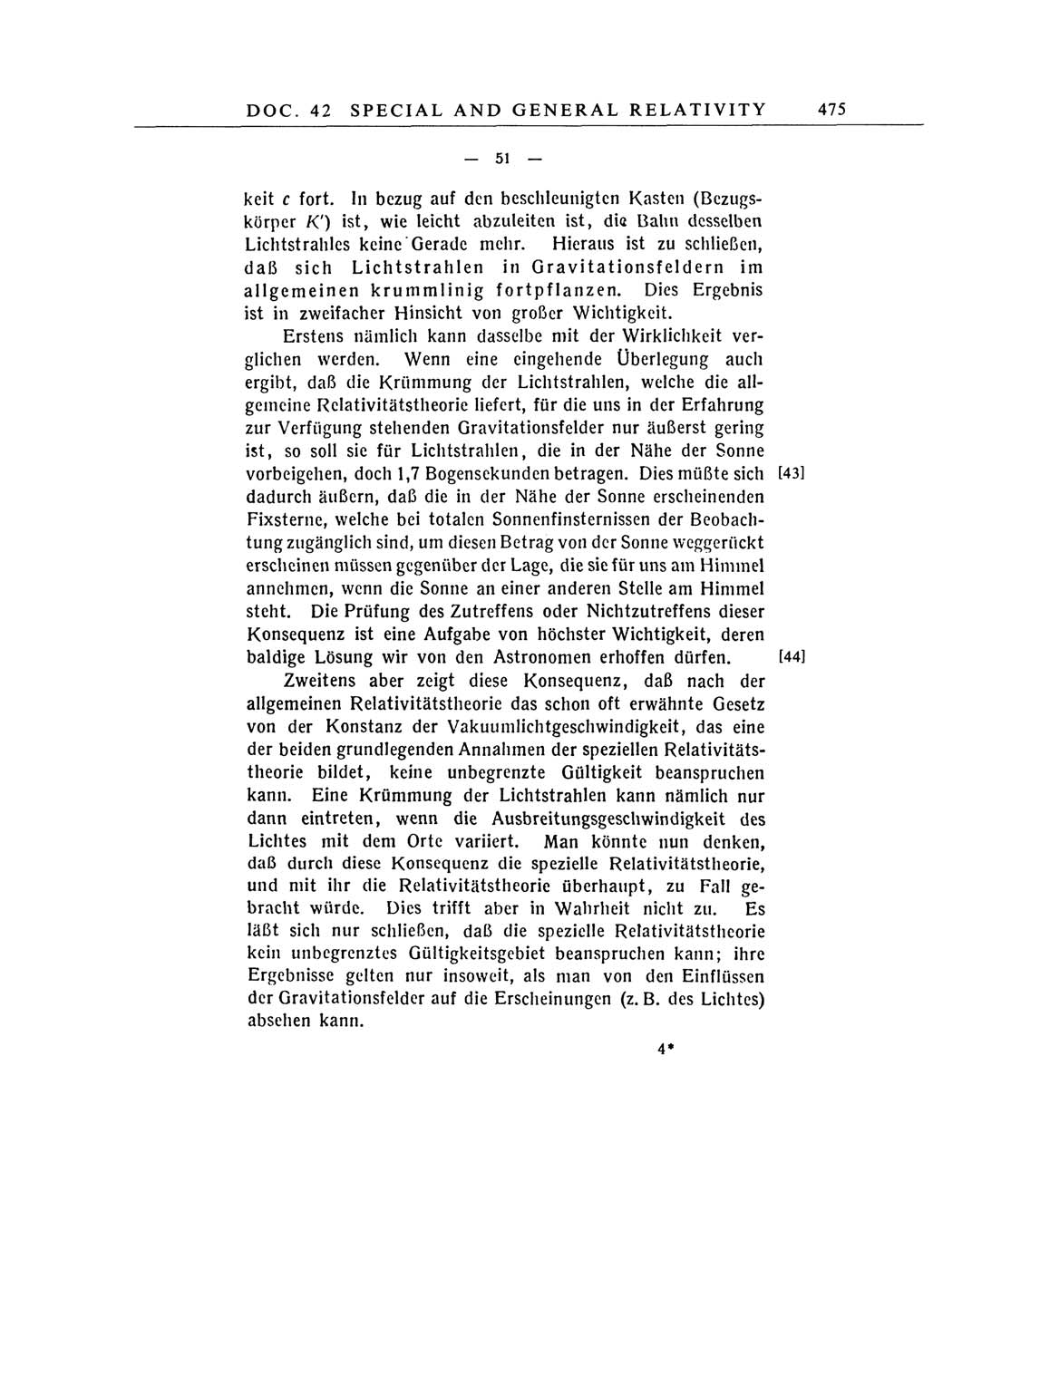 Volume 6: The Berlin Years: Writings, 1914-1917 page 475